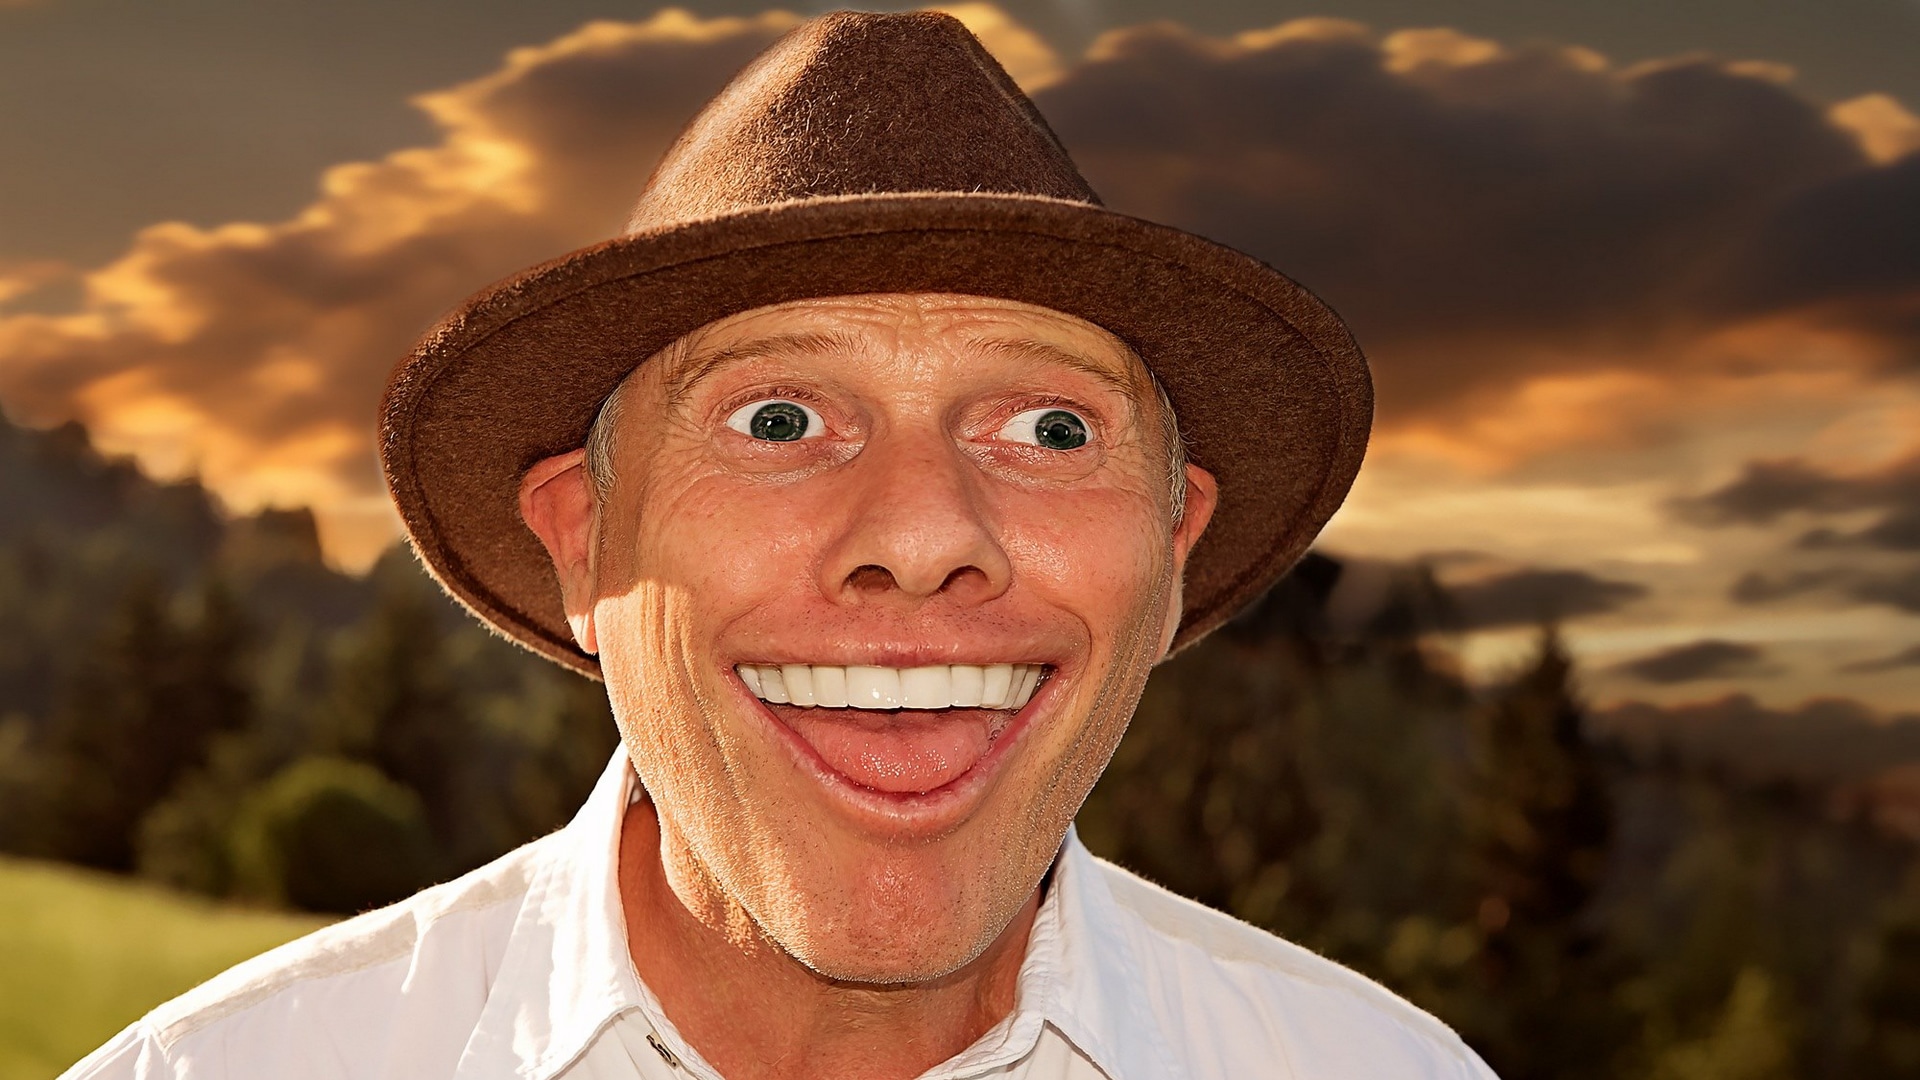 Wallpaper / caricature man human person male hat comic funny 4k wallpaper free download